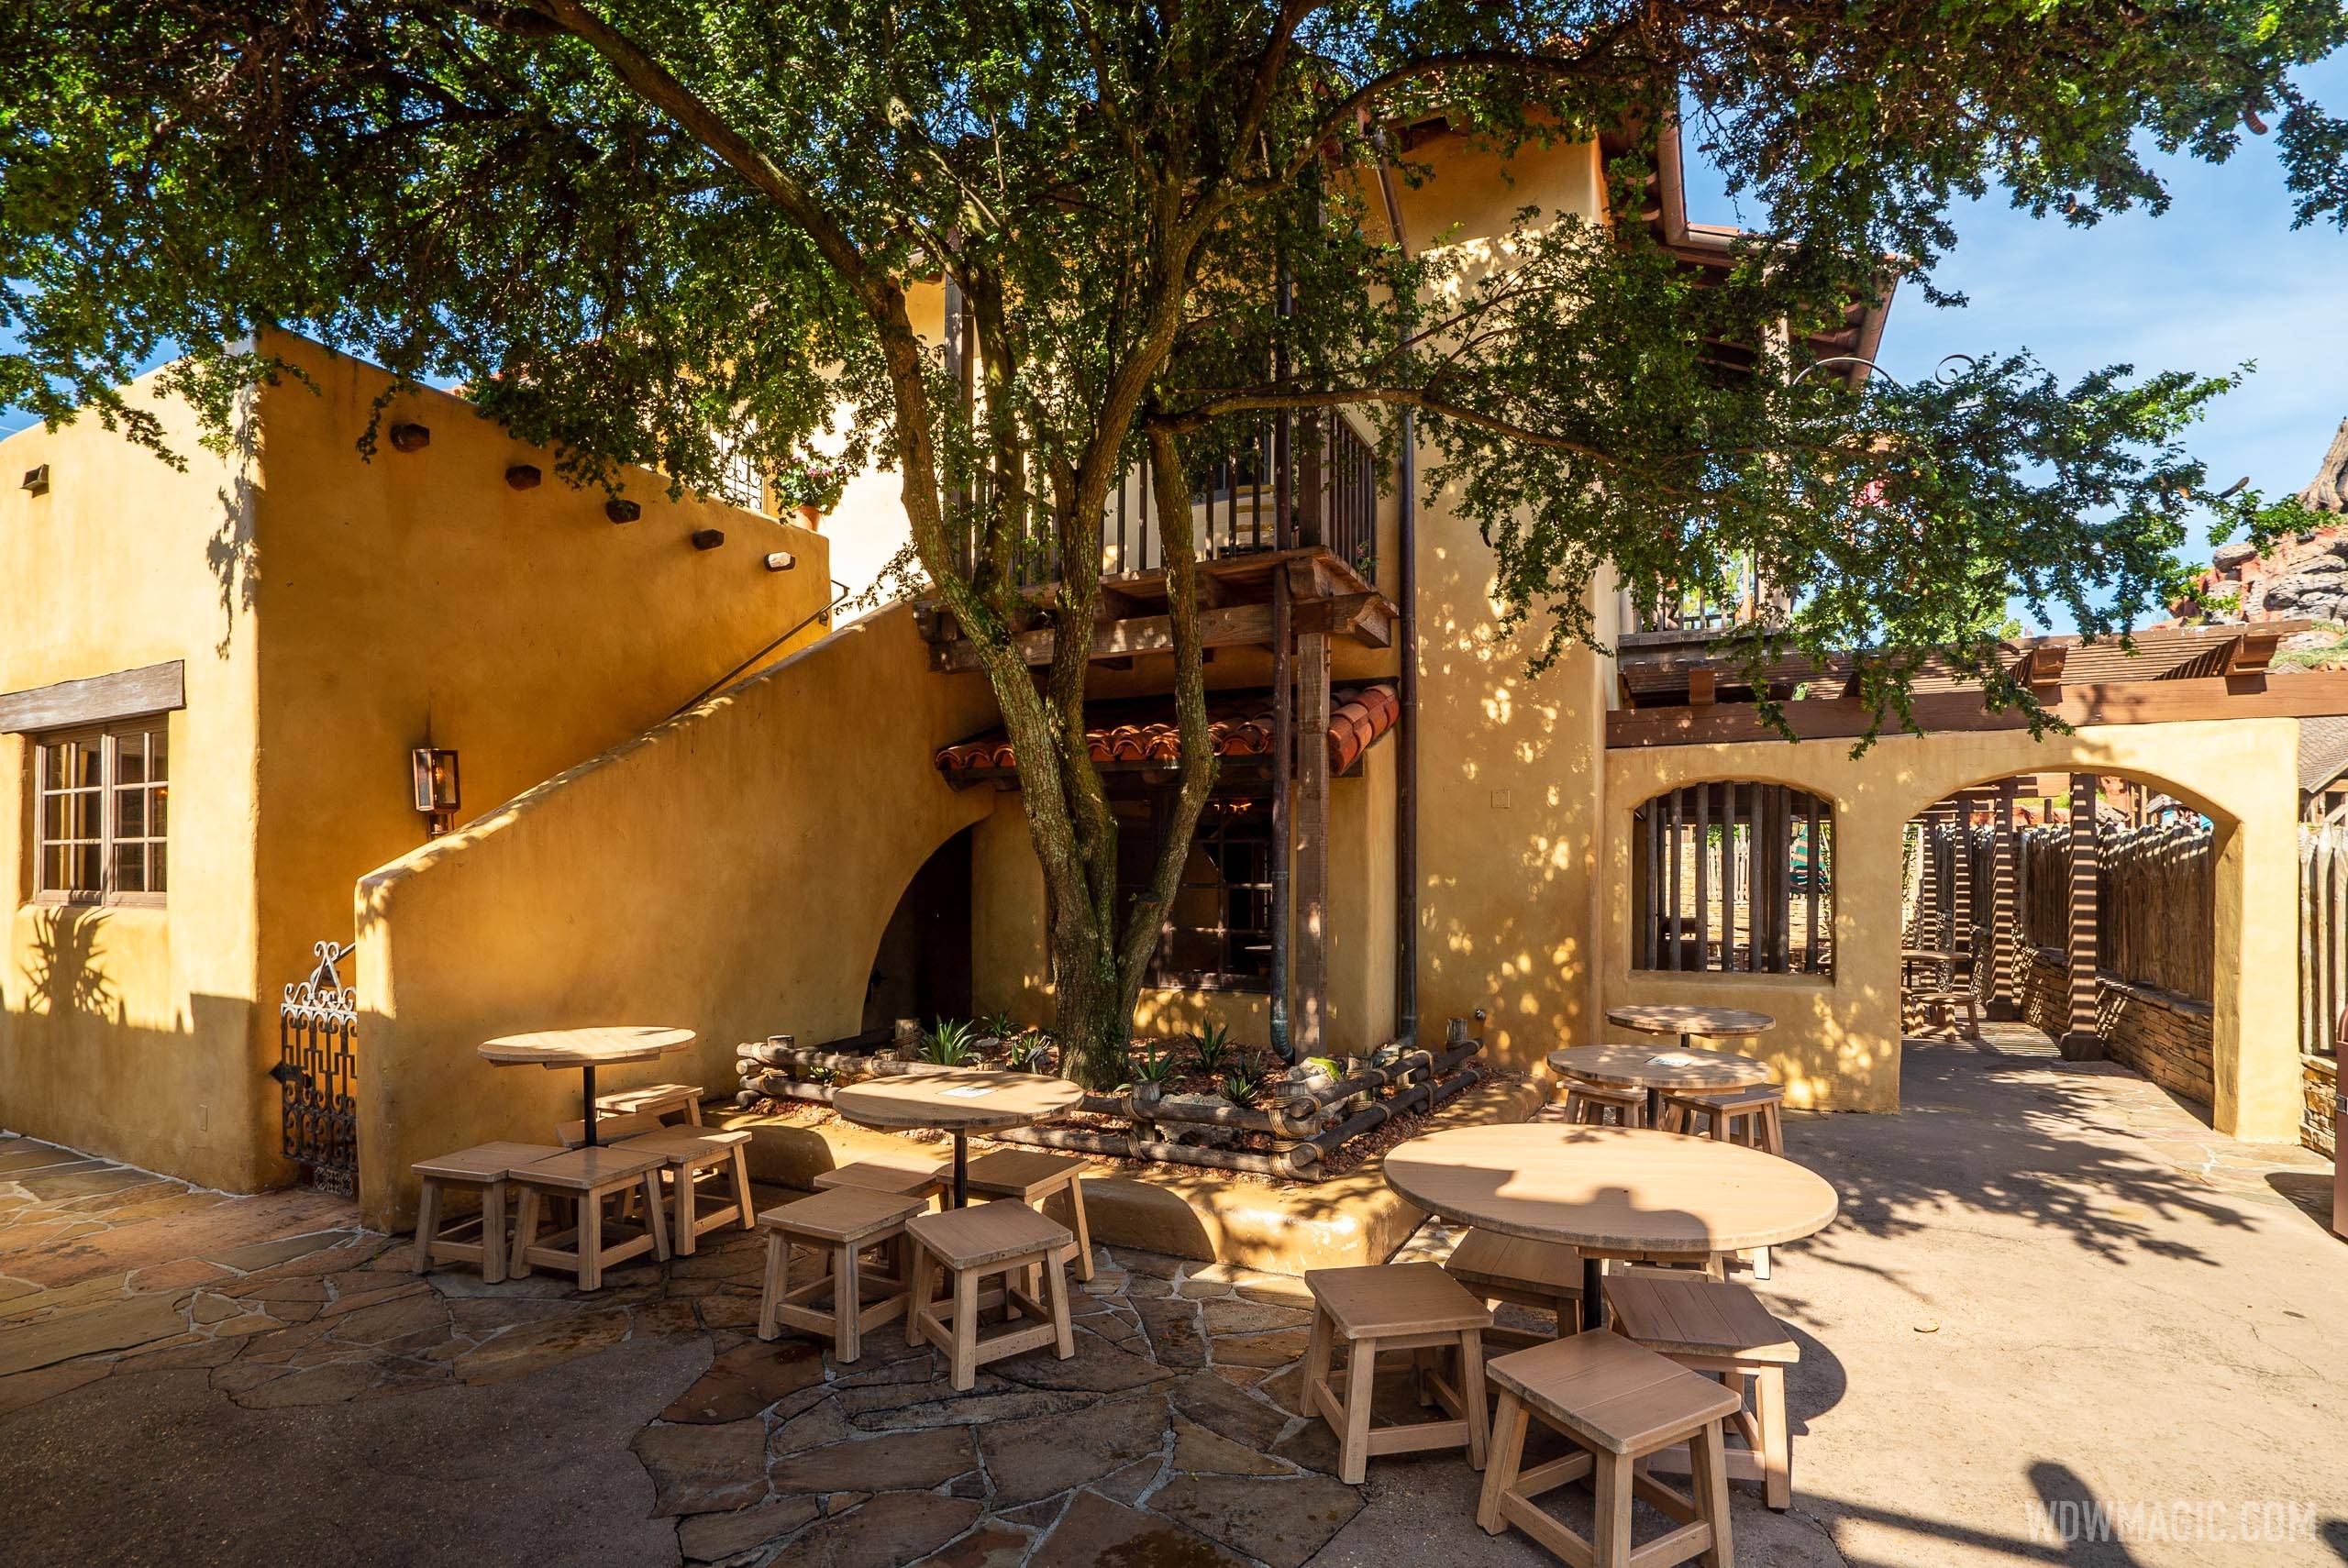 Pecos Bill Cafe closing for short refurbishment to launch new menu